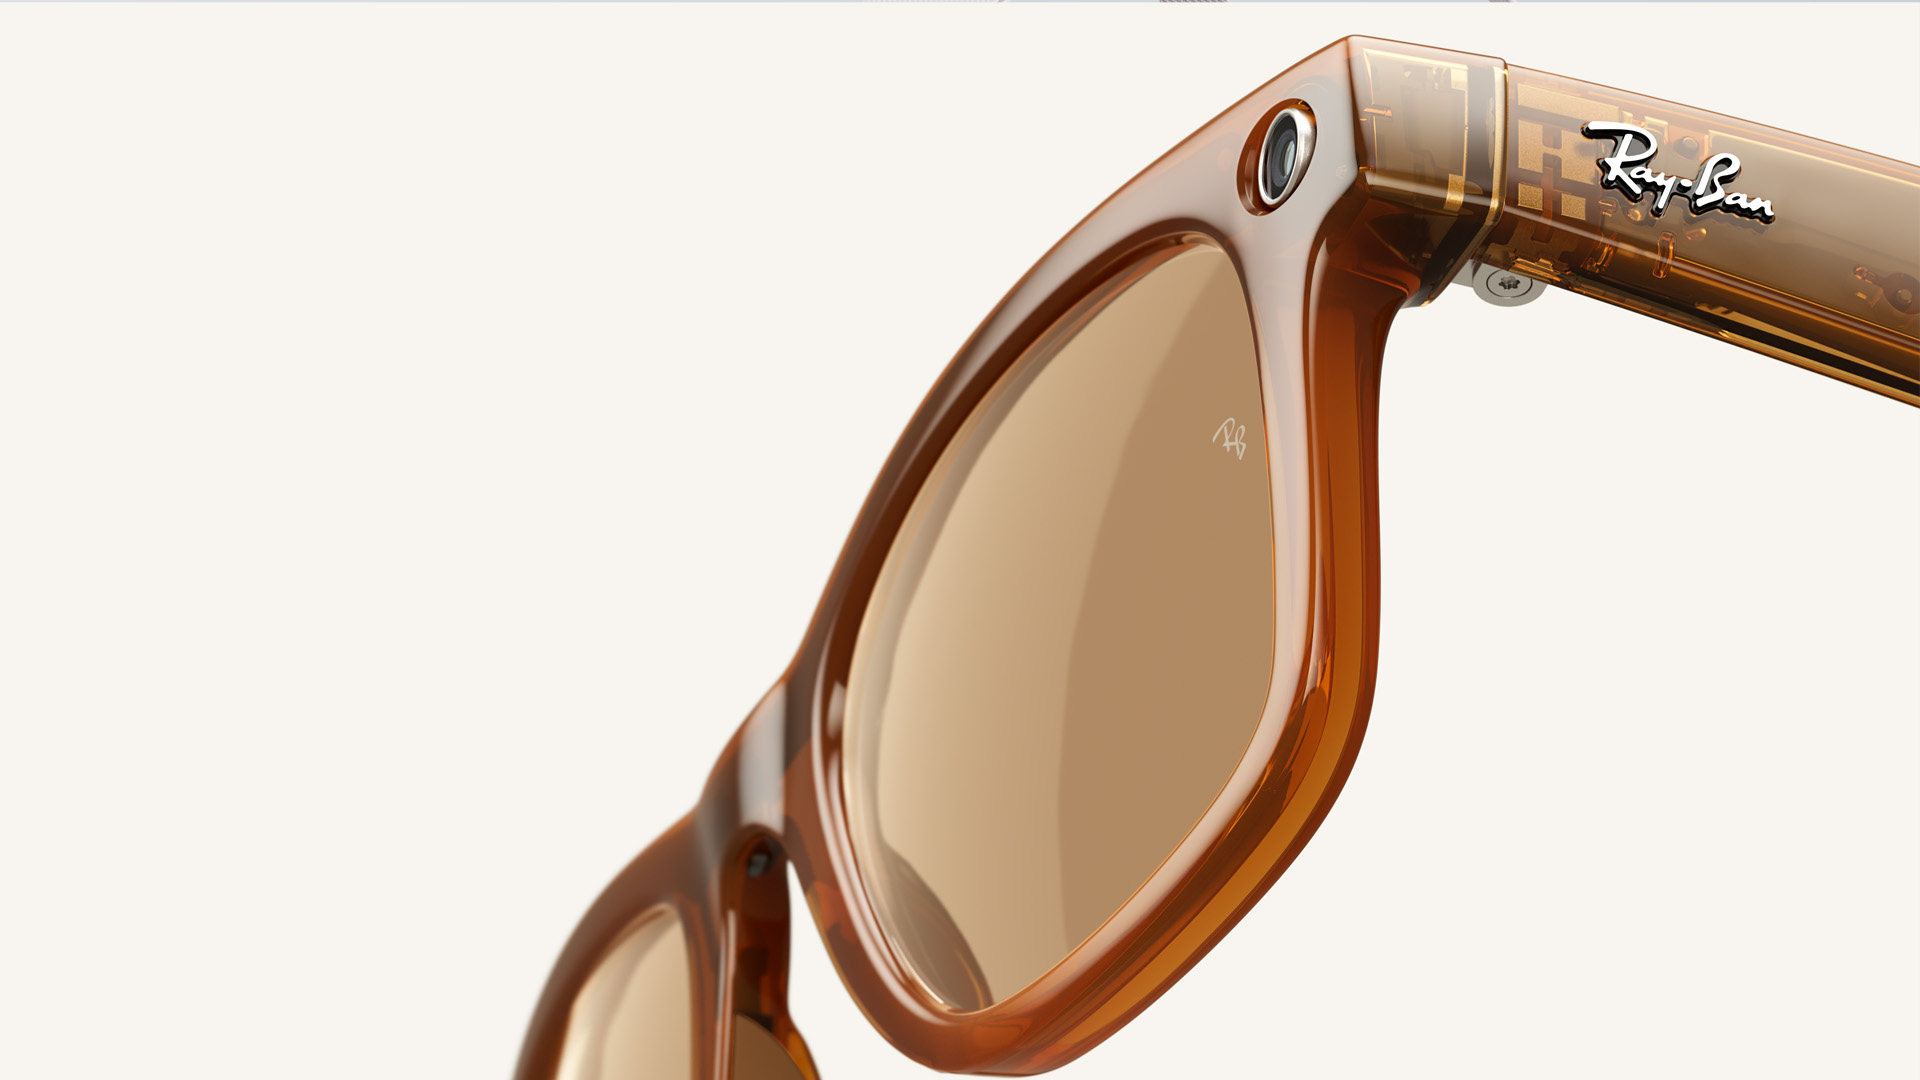 New RayBan Meta Smart Glasses bring a lot of improvements